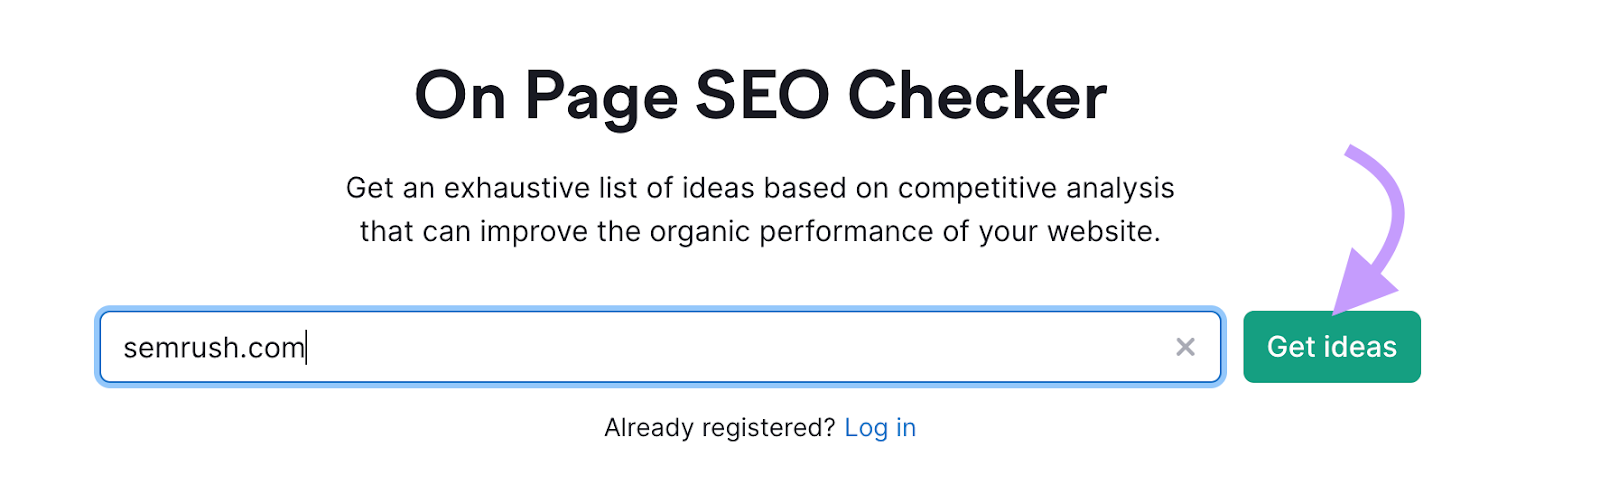 "semrush.com" domain entered into the On Page SEO Checker search bar